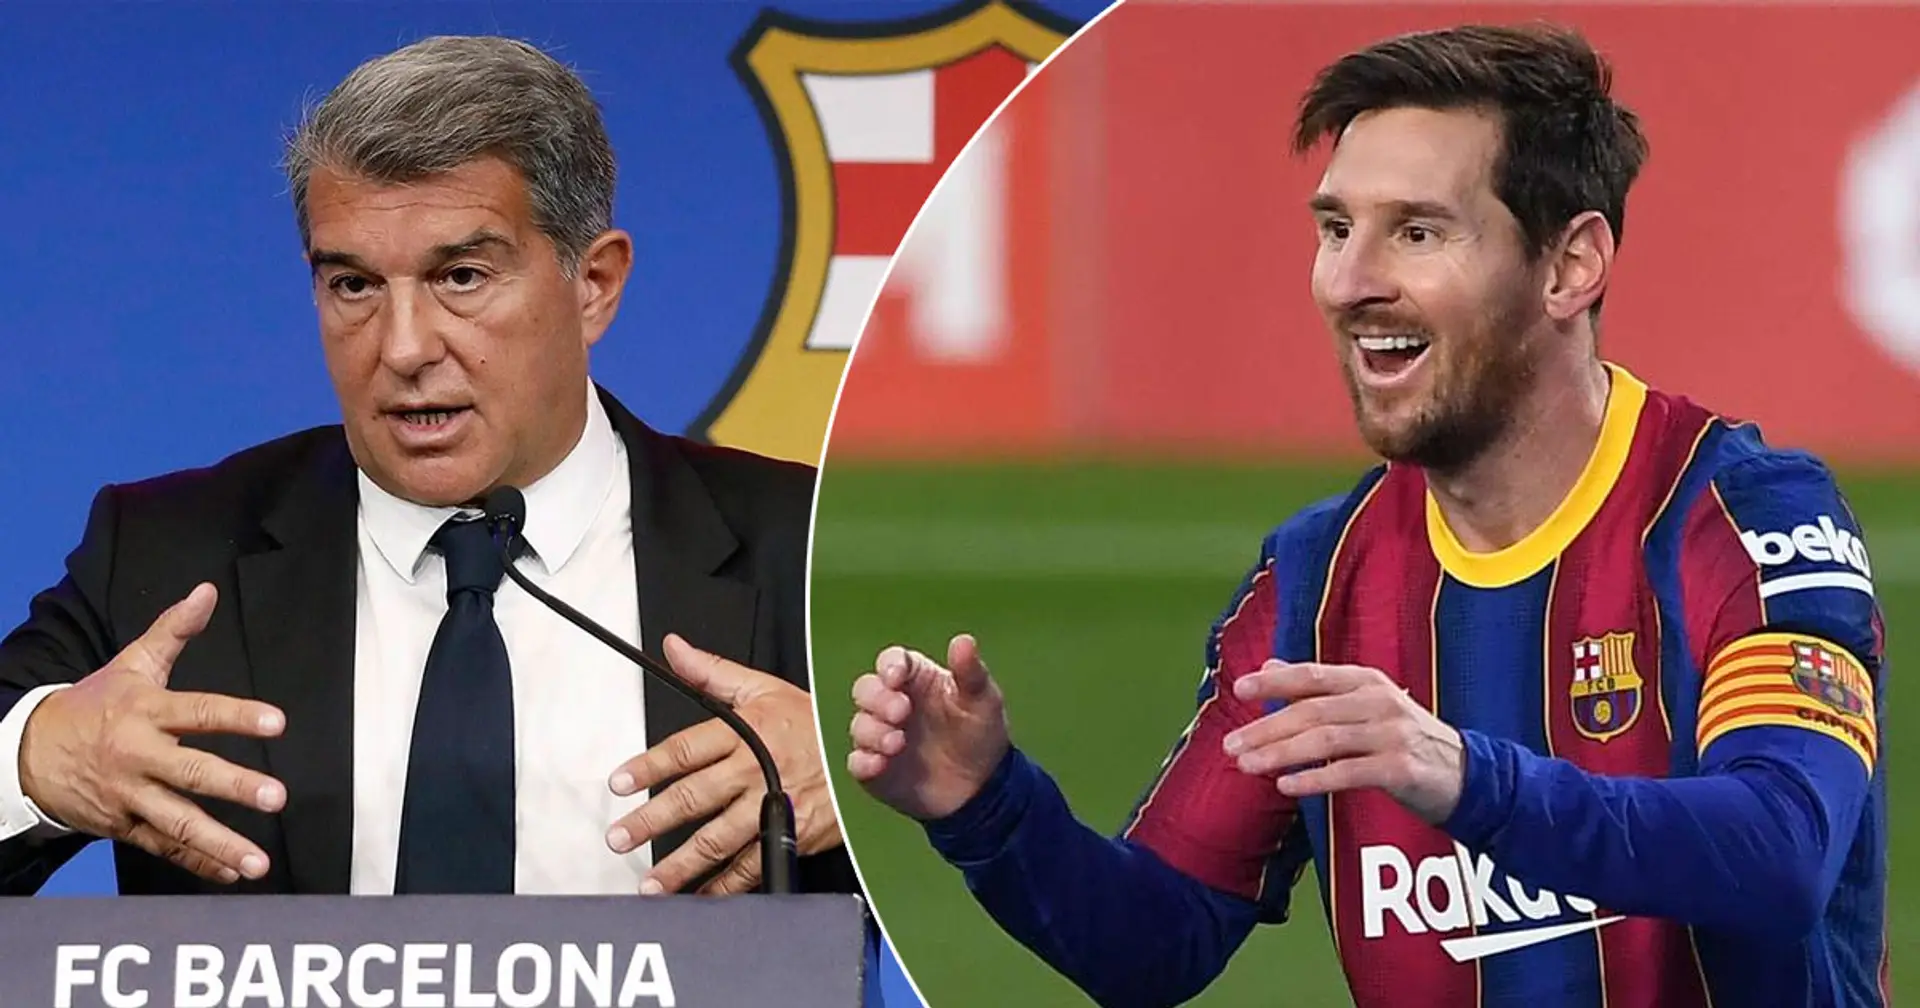 Barca set deadline for Leo Messi extension (reliability: 5 stars)